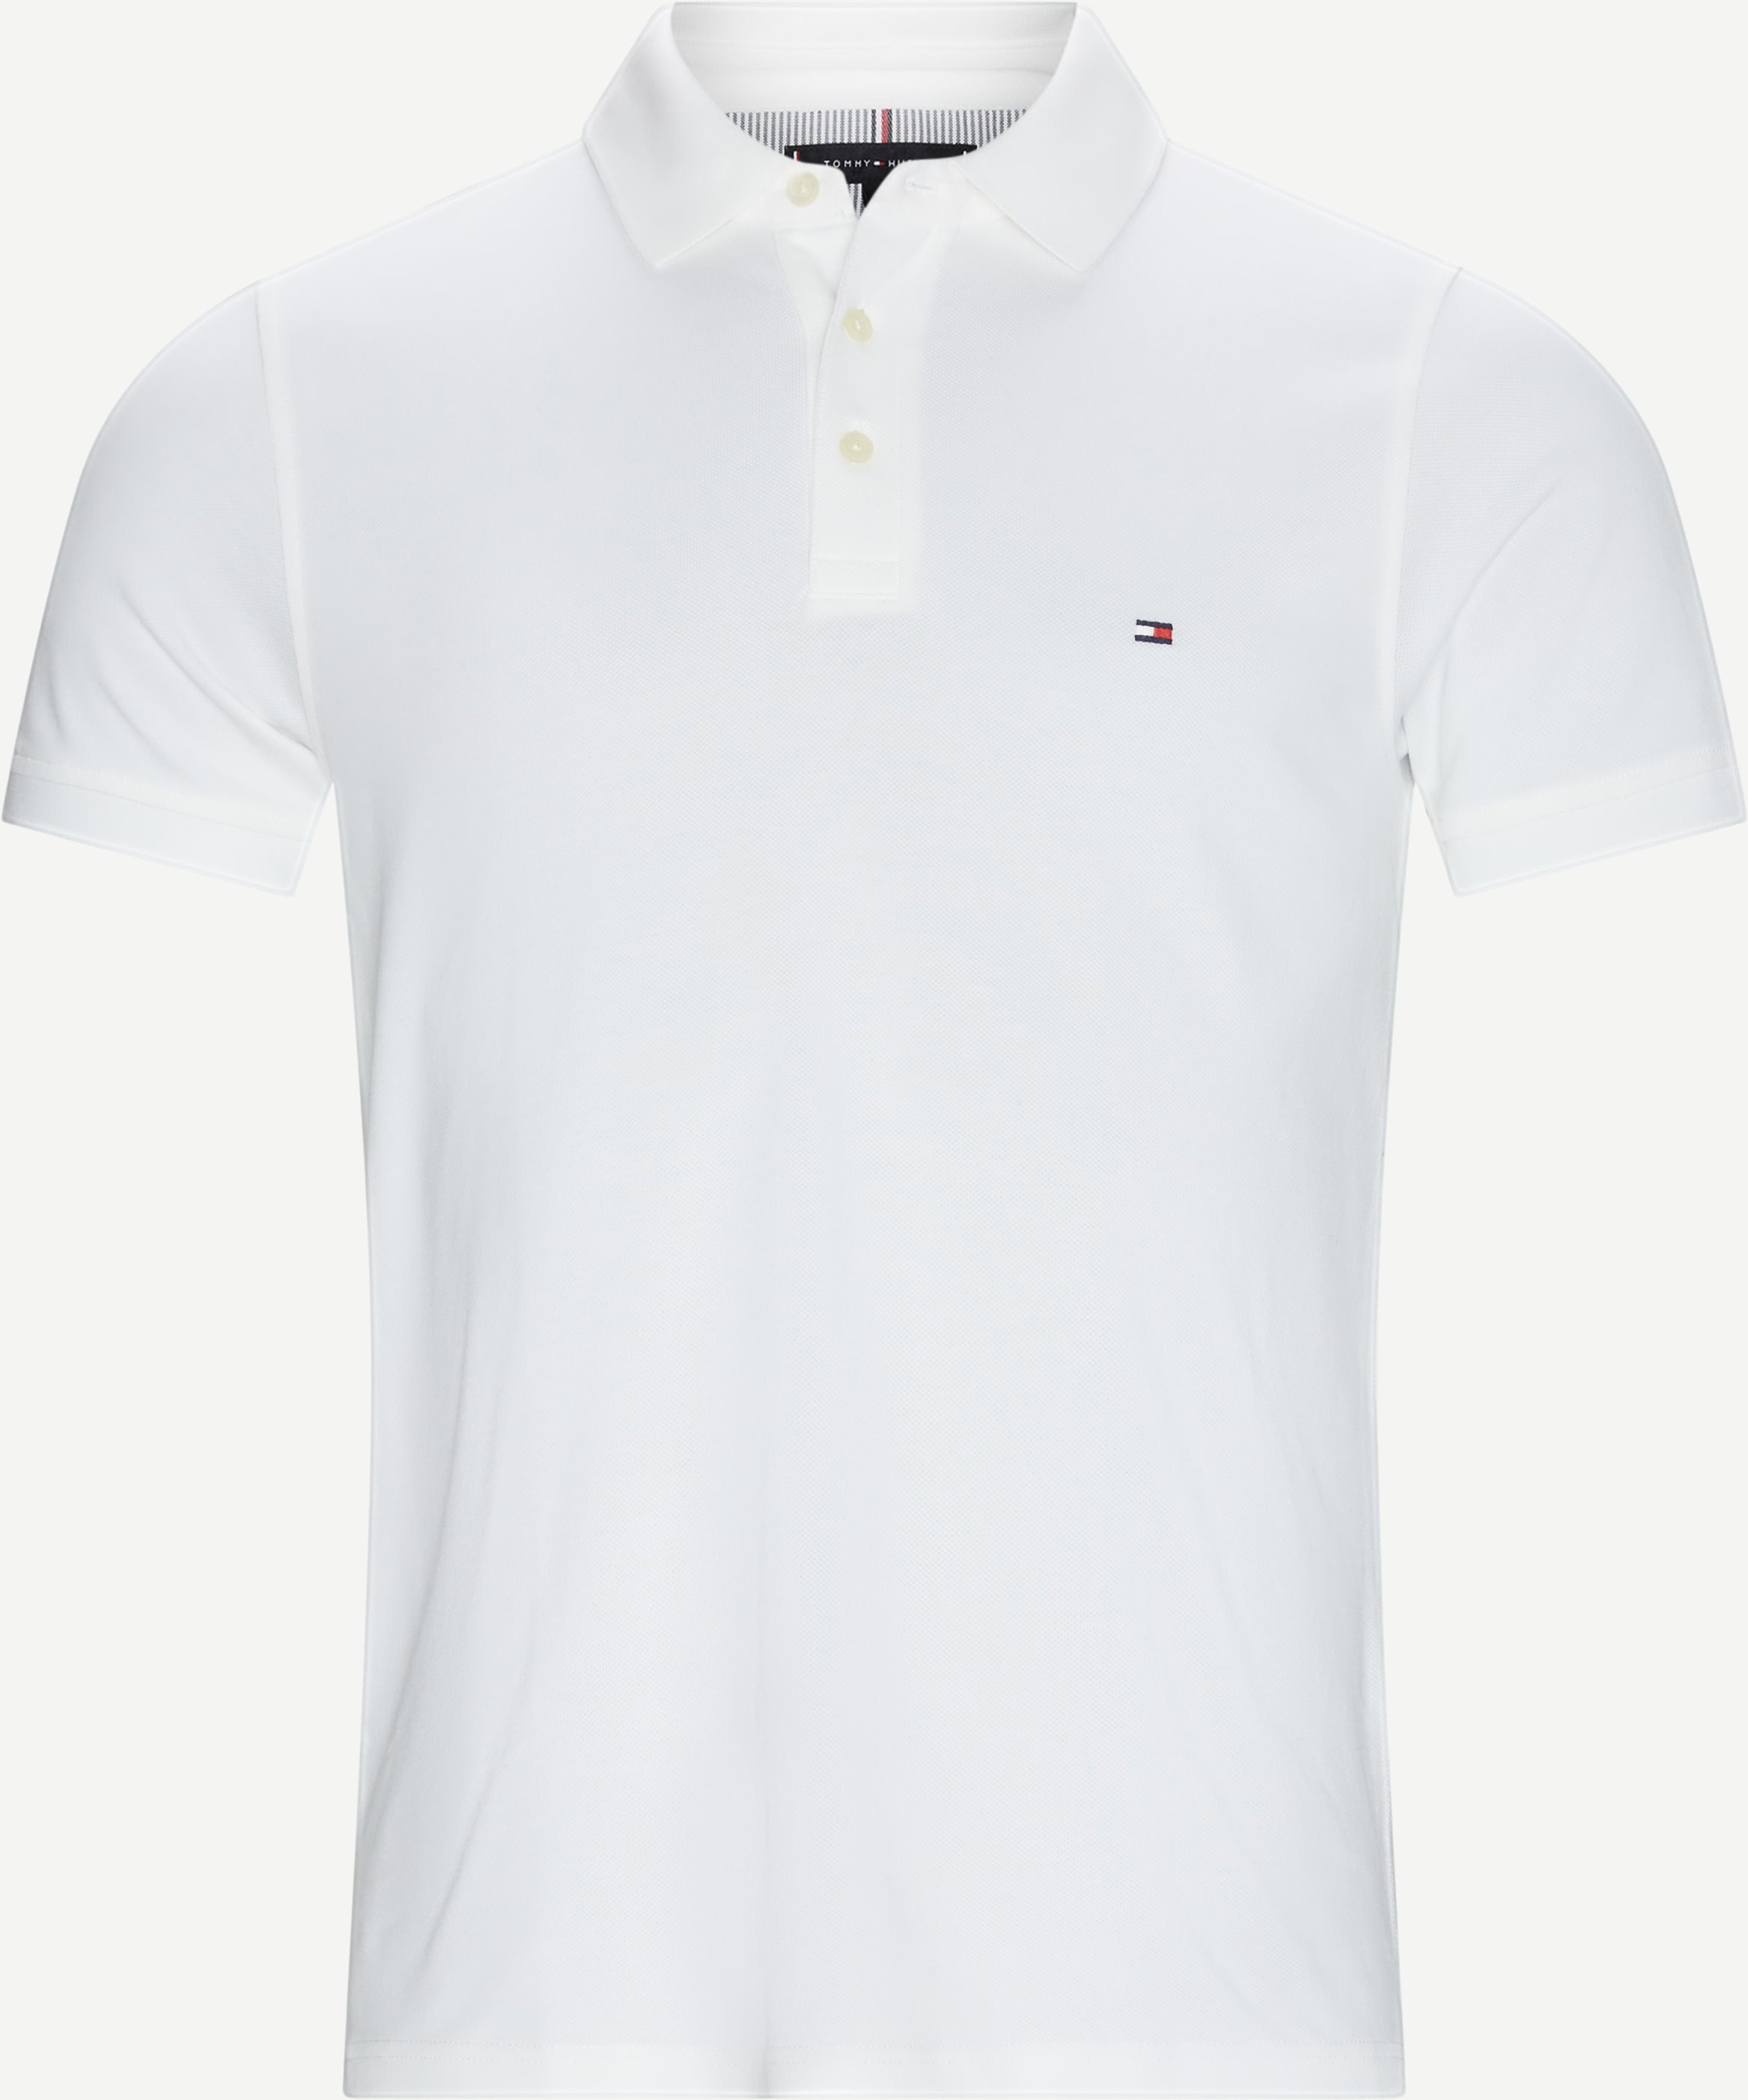 Core 1985 Polo Shirt - T-shirts - Slim fit - White